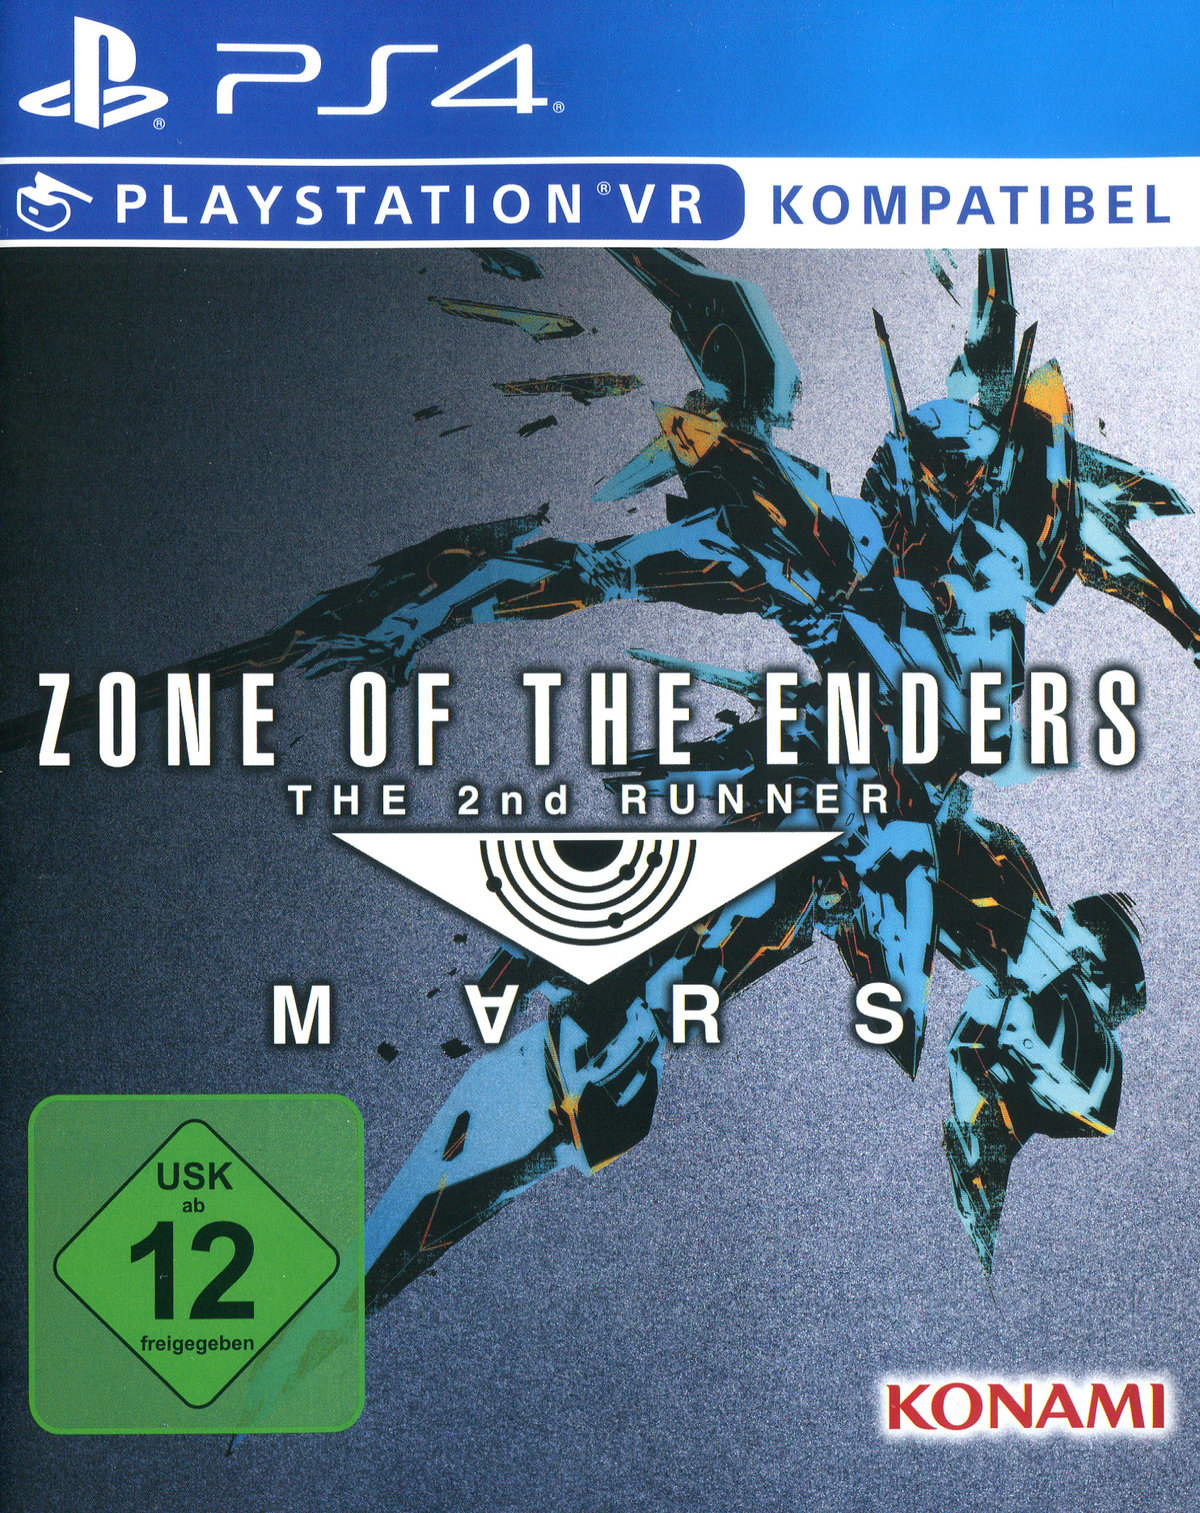 Enders of [PlayStation Zone Remastered VR-kompatibel Runner - PS-4 2nd 4] MARS